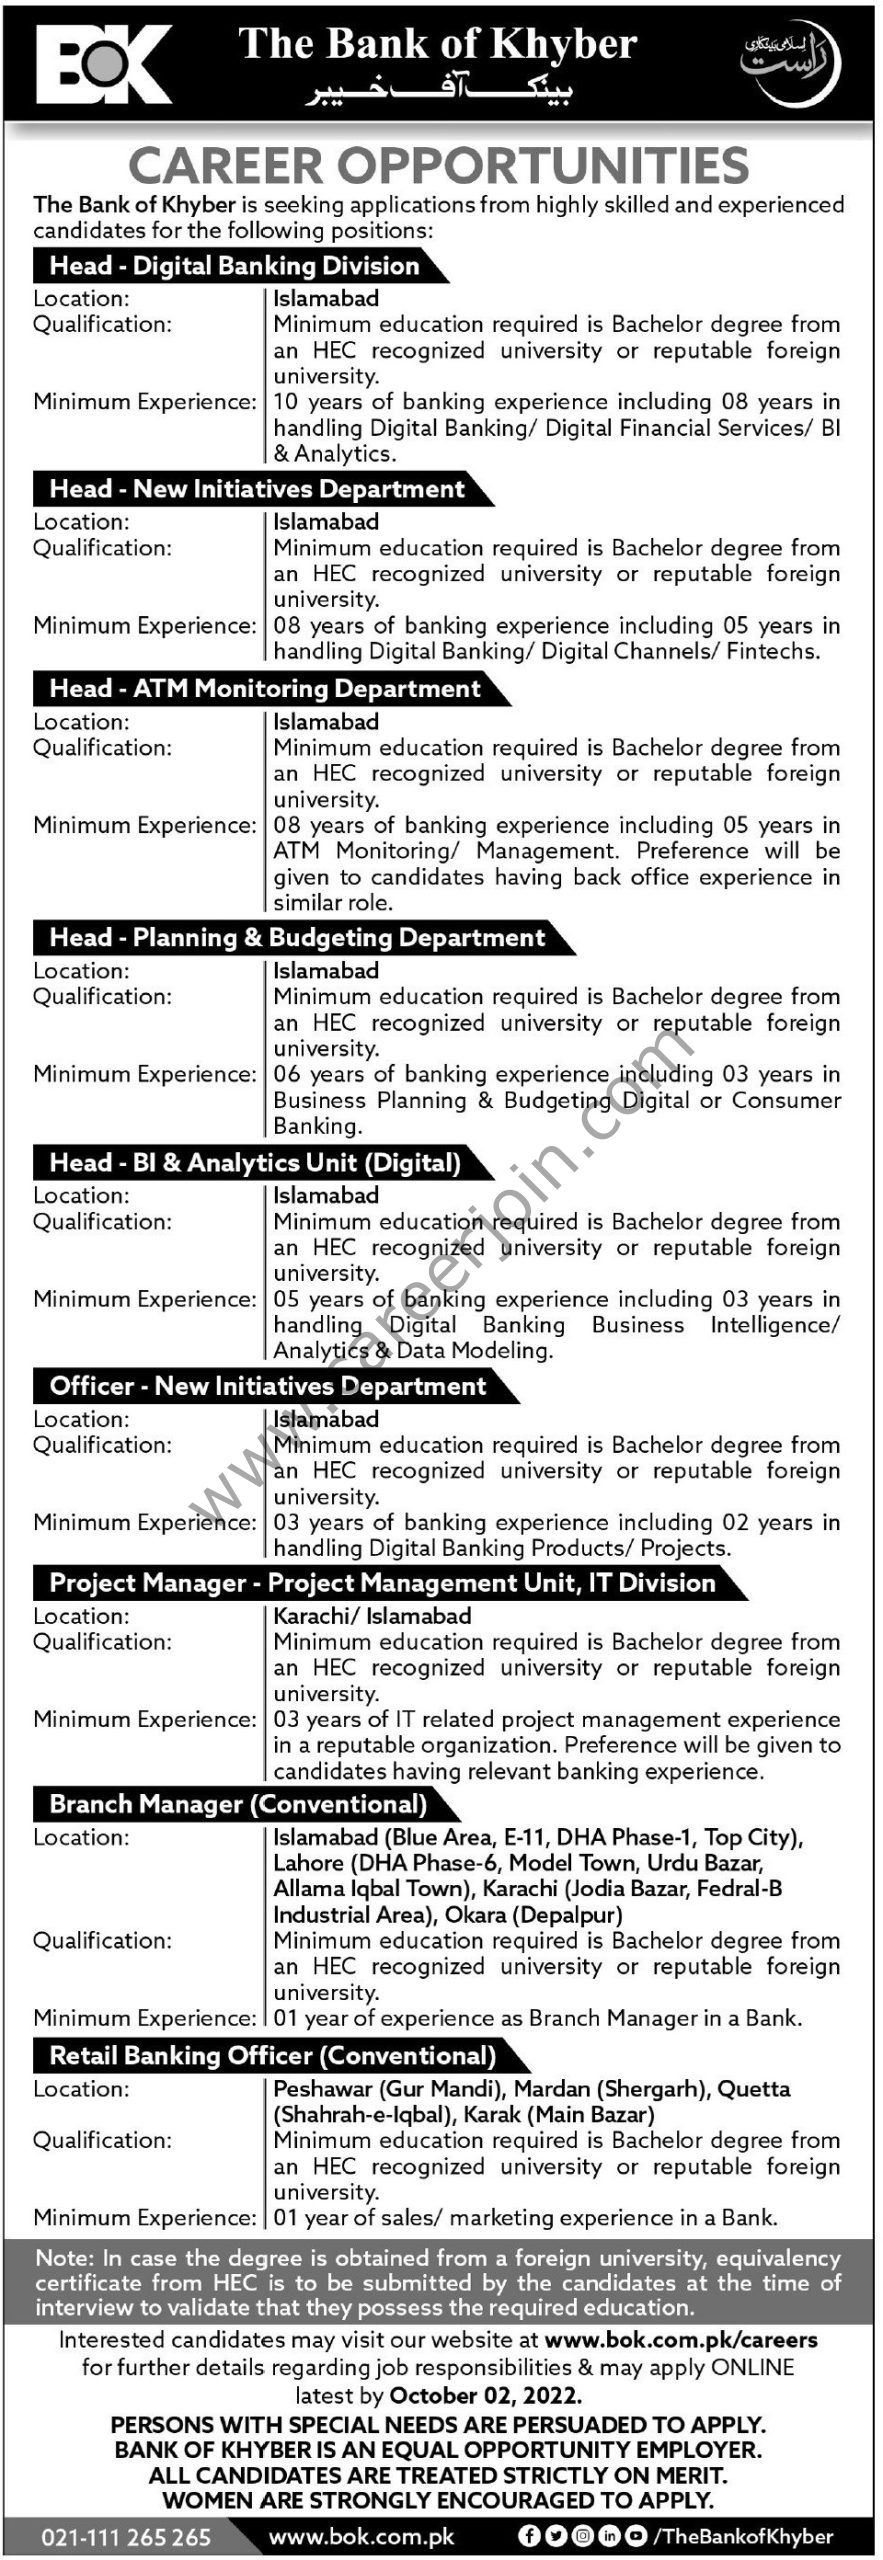 Bank of Khyber BOK Jobs 18 September 2022 Express Tribune 01